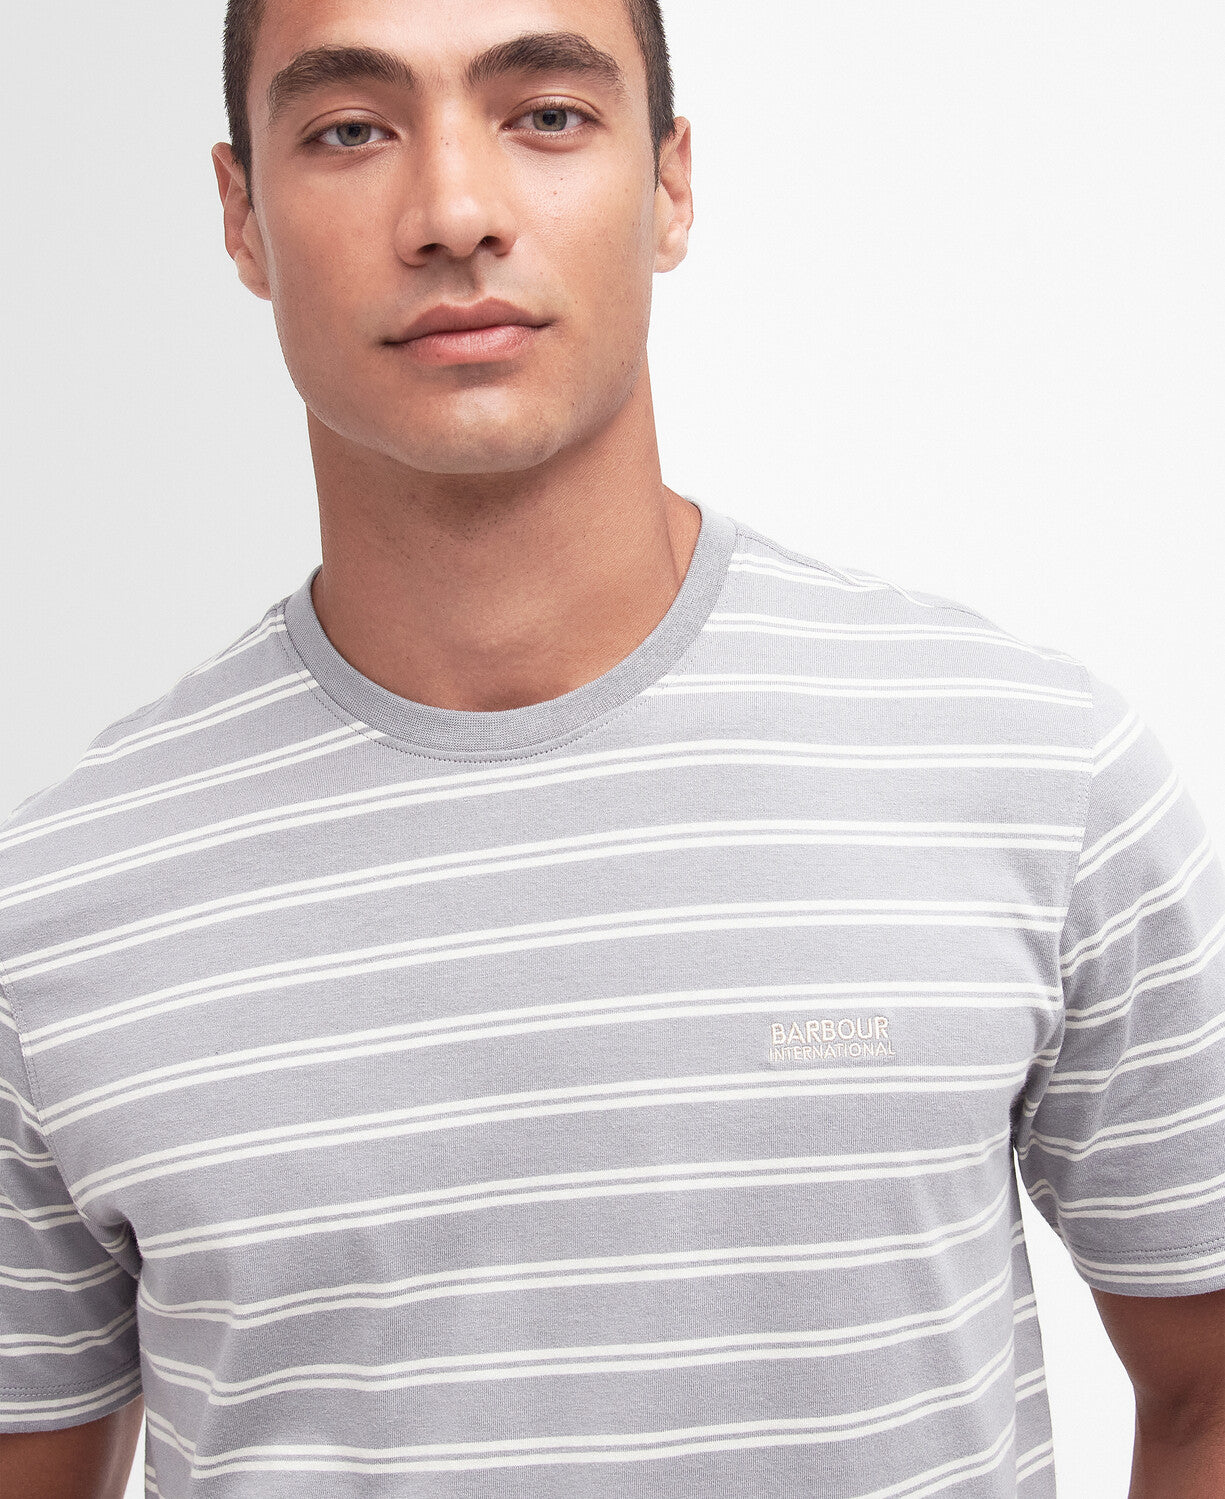 Barbour International Bernie Stripe T-Shirt GY12 Grey